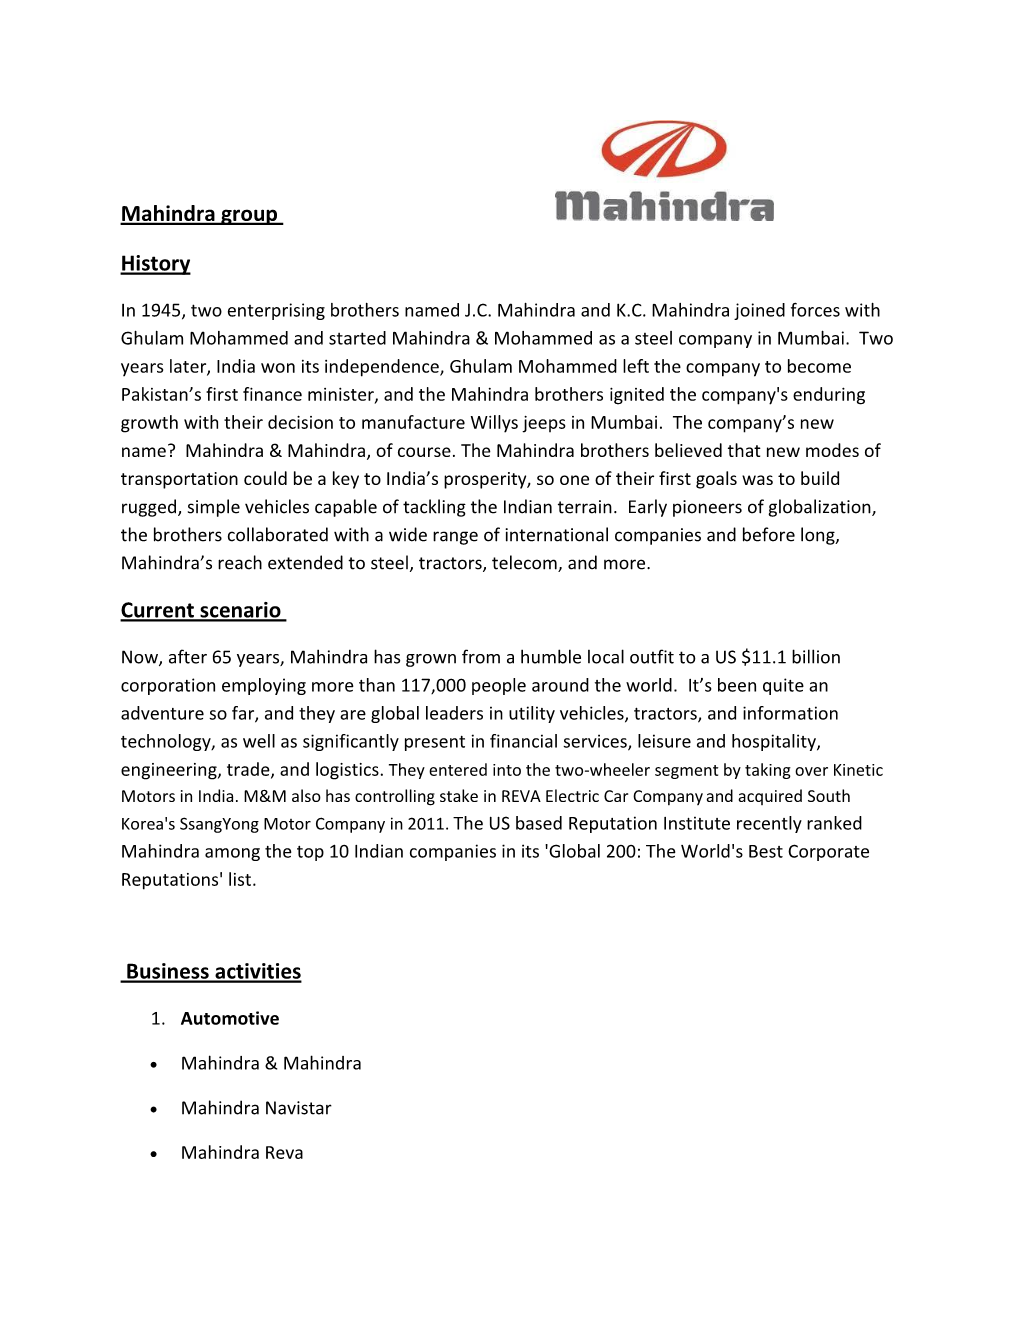 Mahindra Group History Current Scenario Business Activities